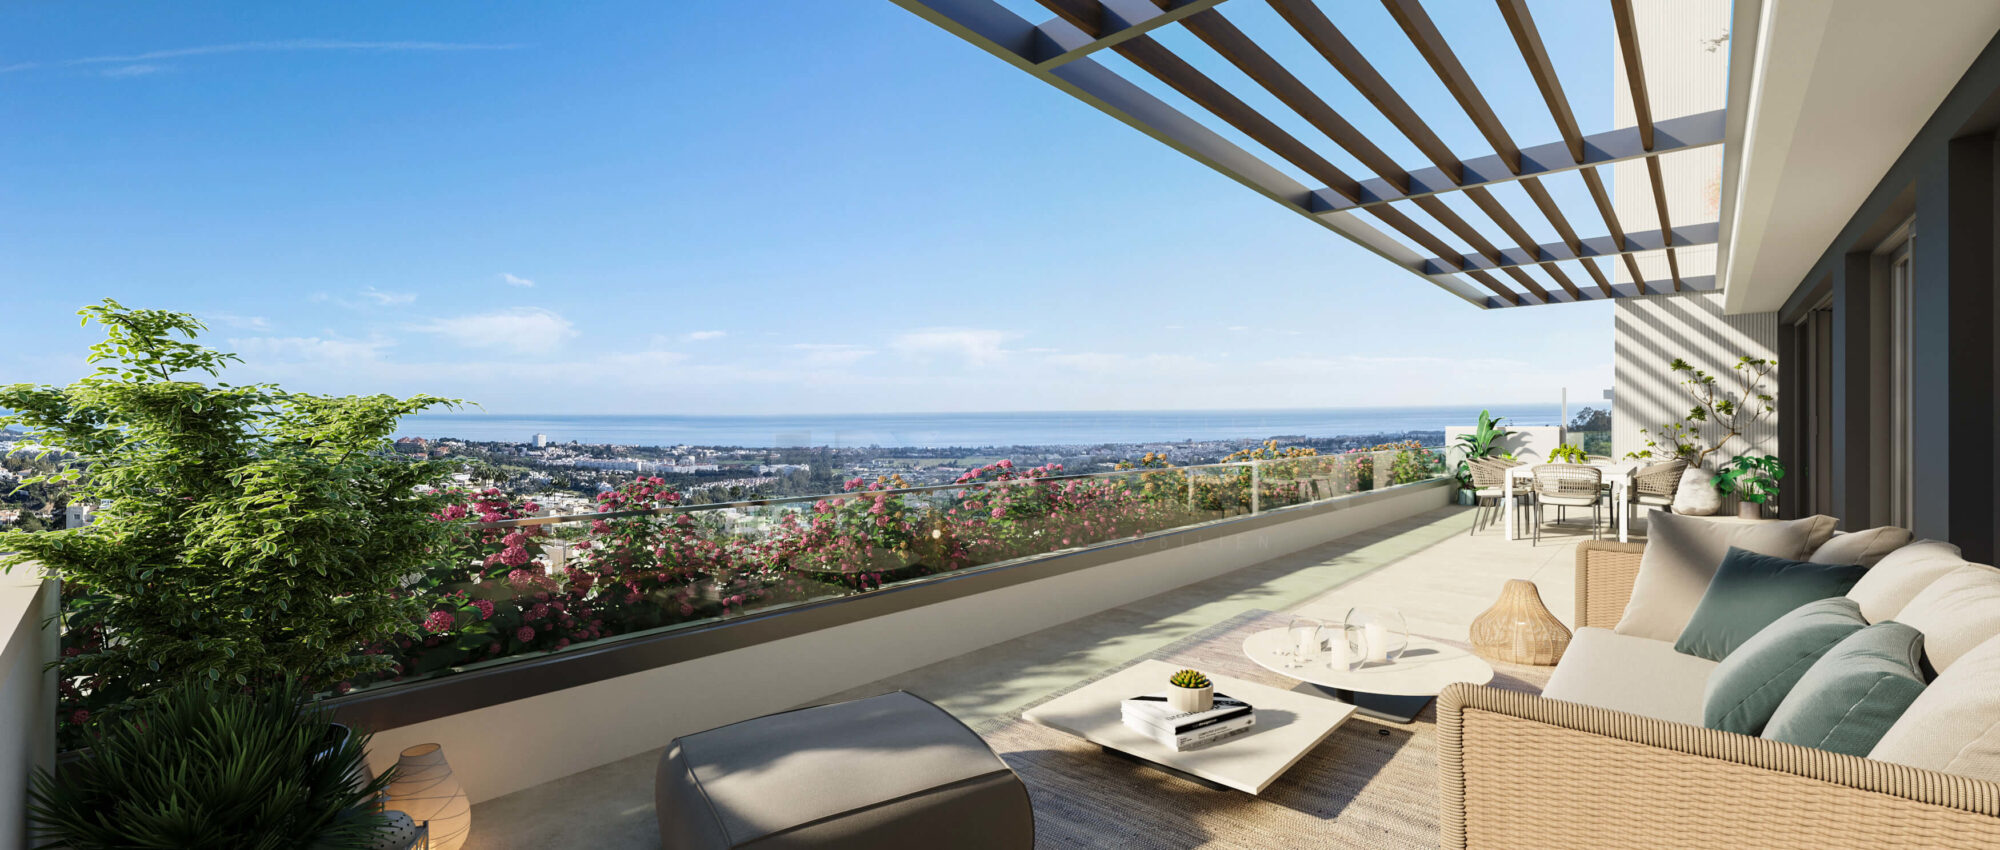 Brandneues Penthouse mit Panoramablick auf das Meer in Marbella